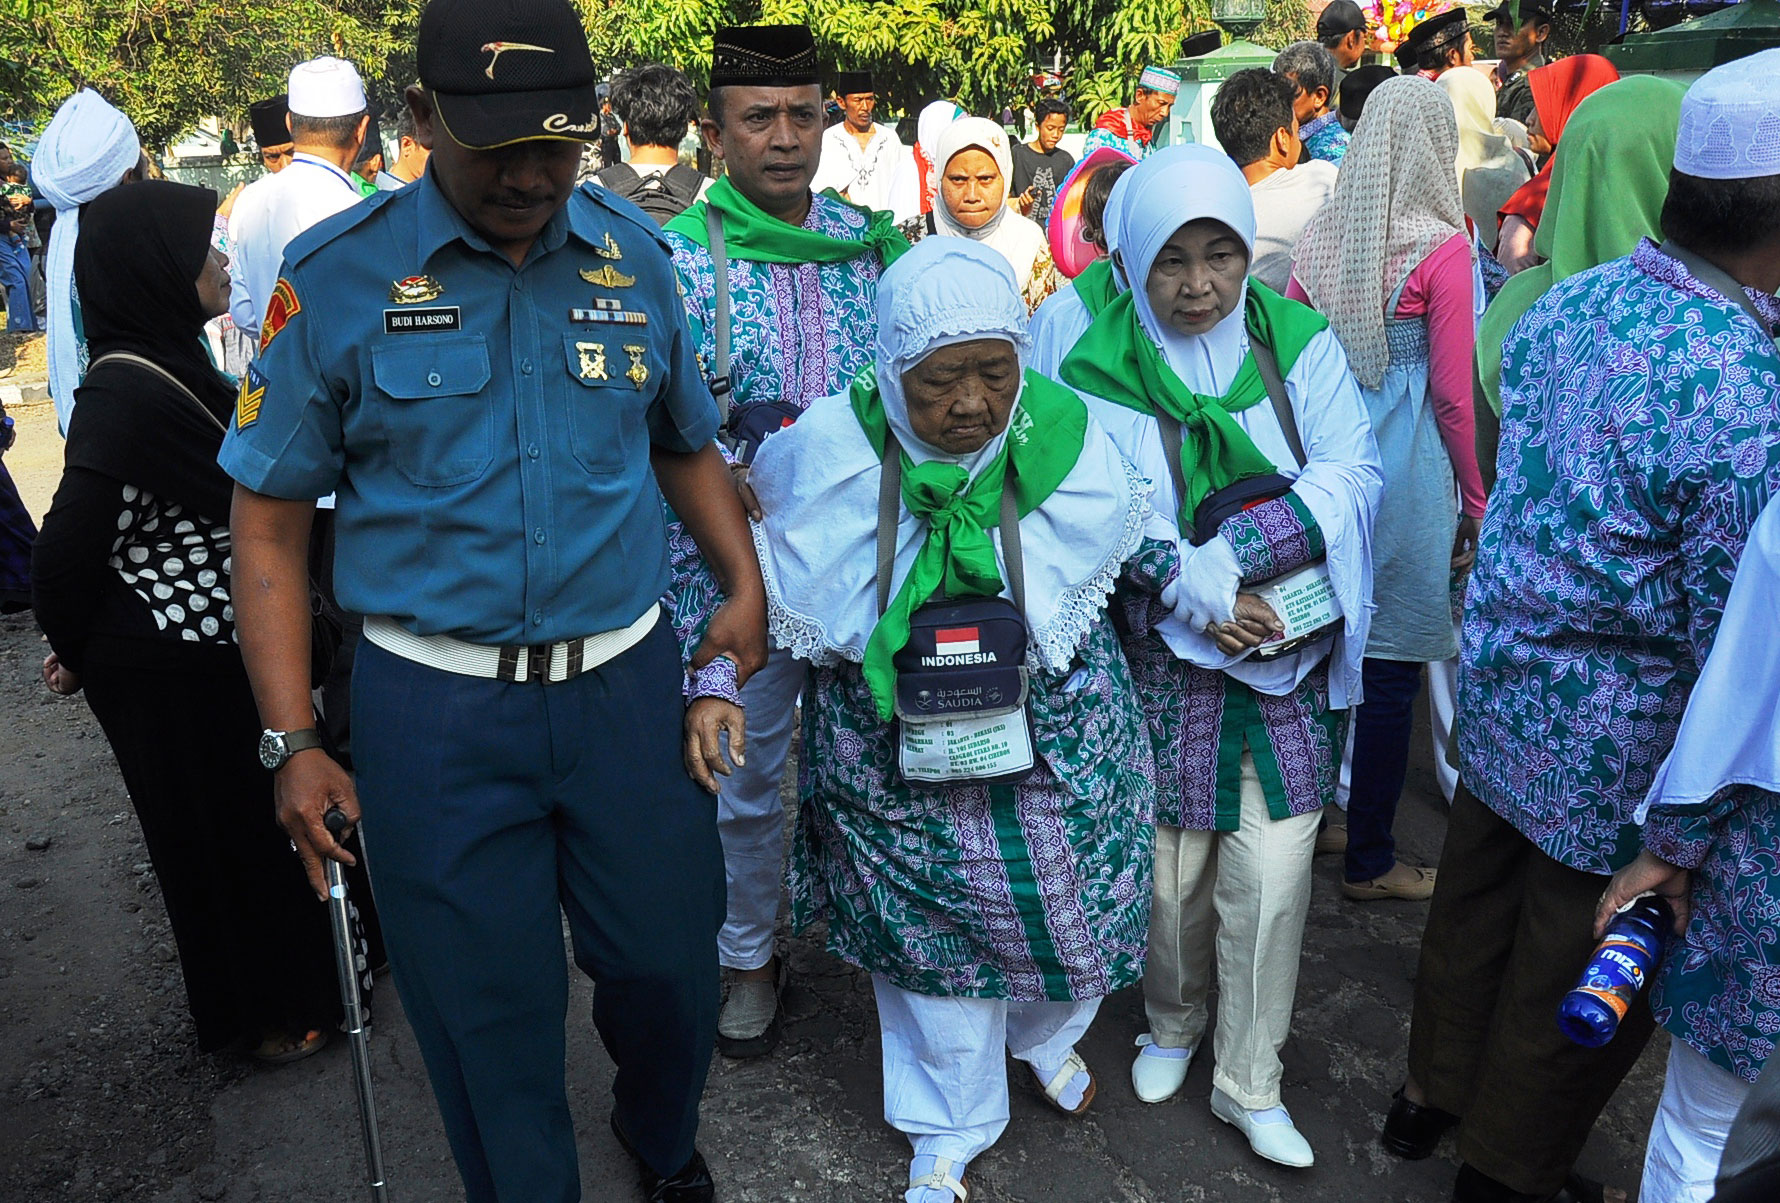 Calhaj Kota Cirebon Menuju Tanah Suci